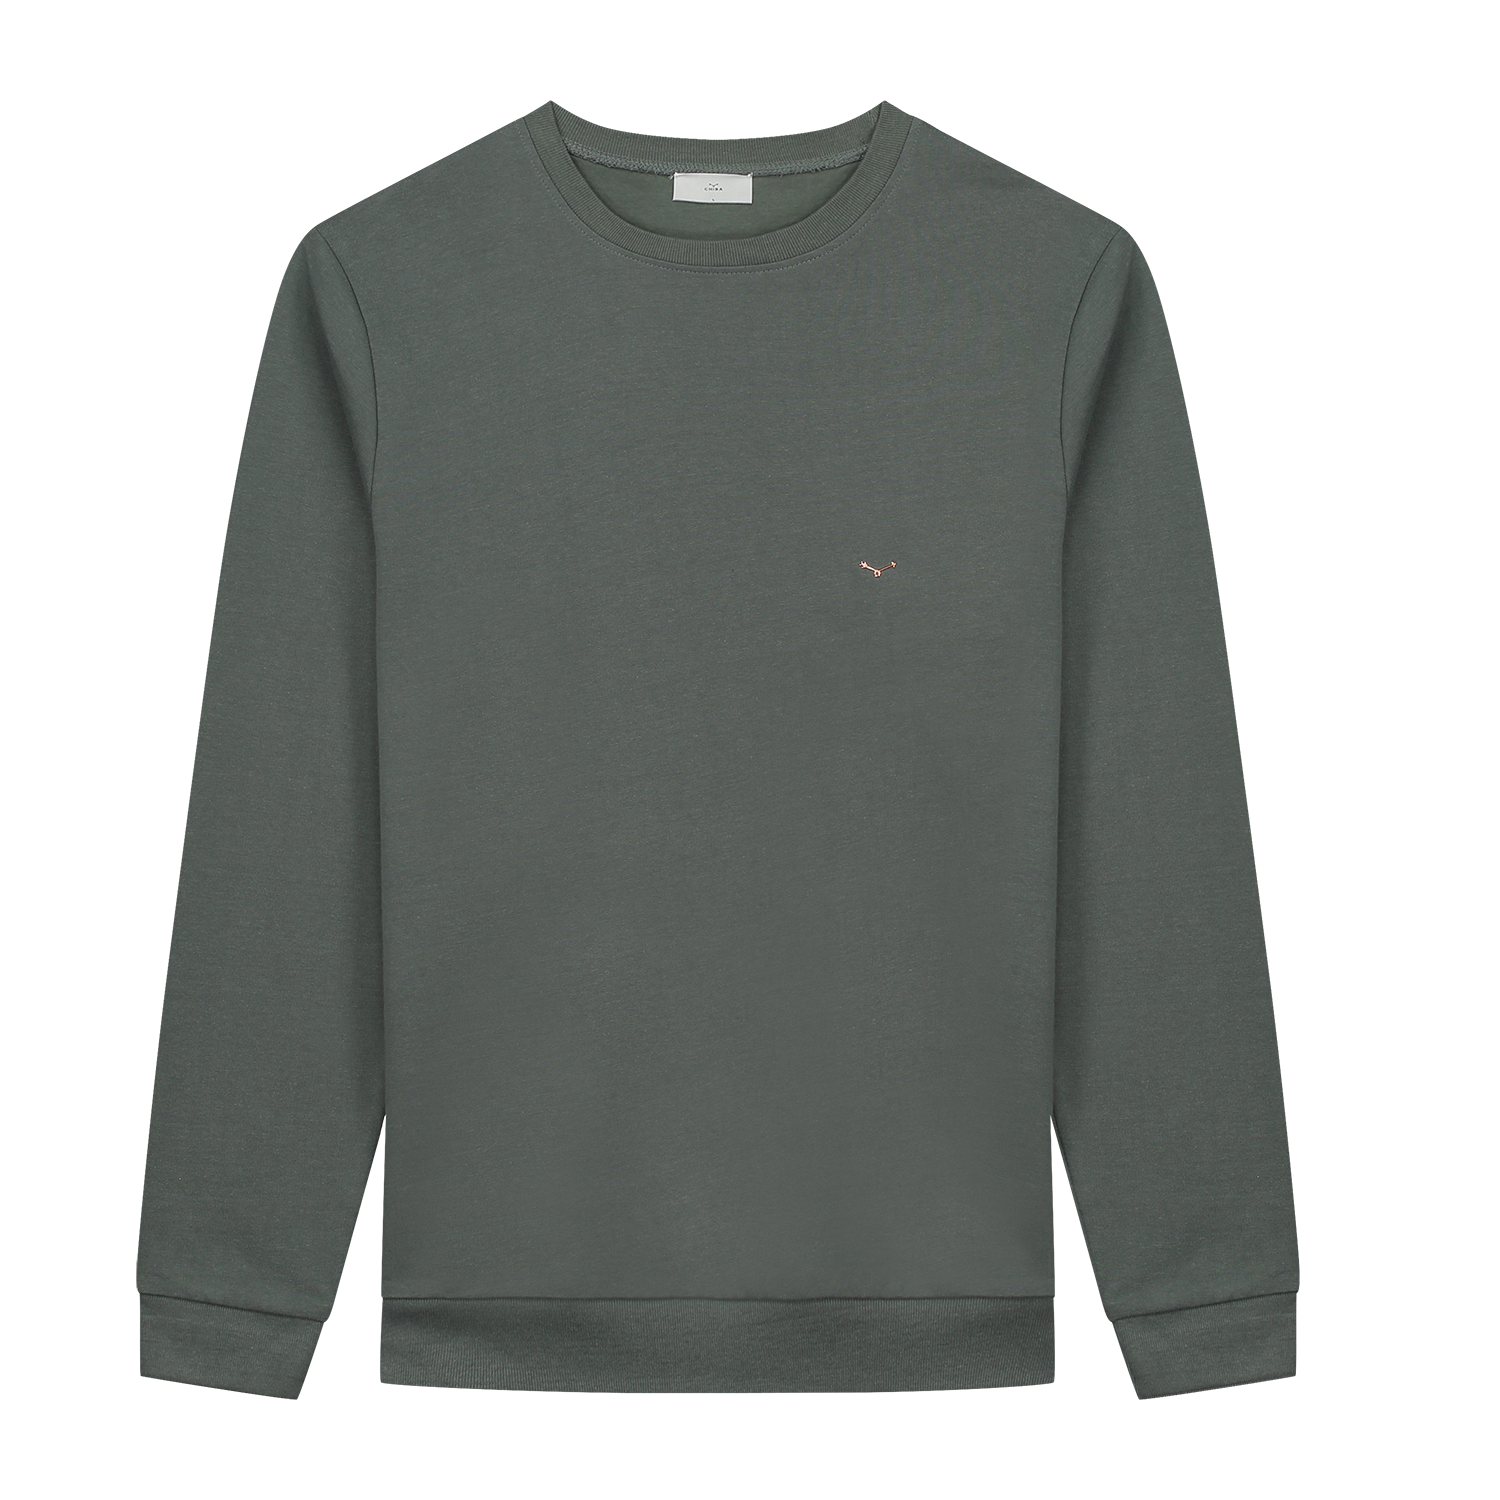 Sweater Sage Green